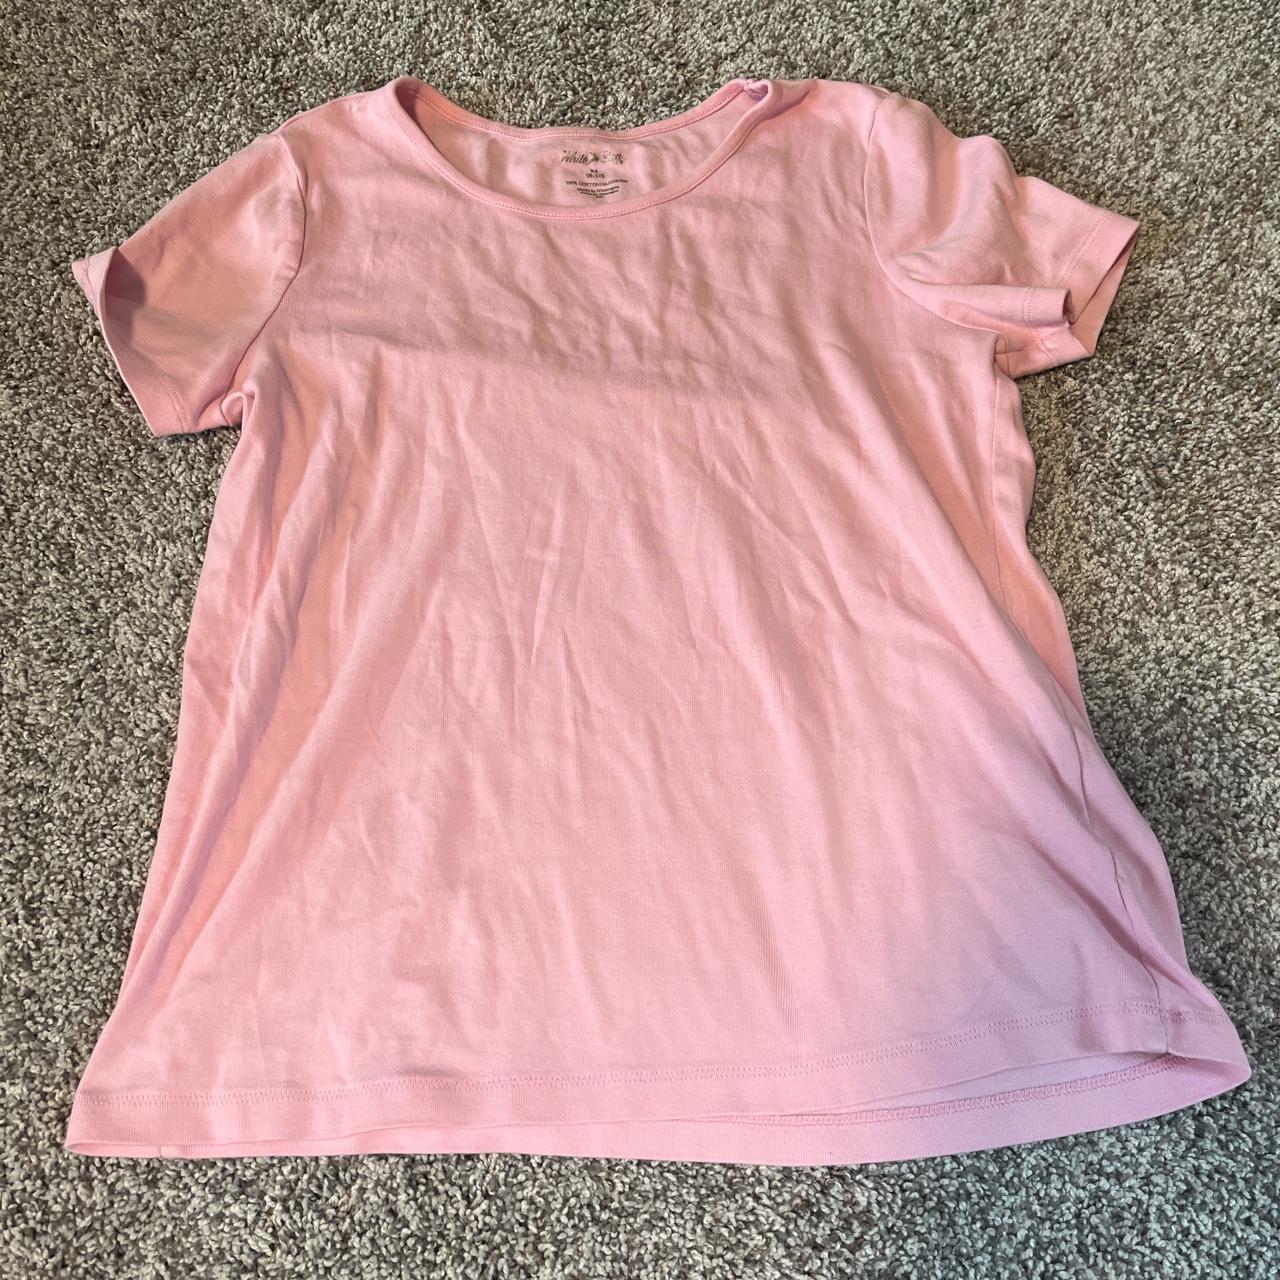 White Stag Women's Pink Shirt | Depop